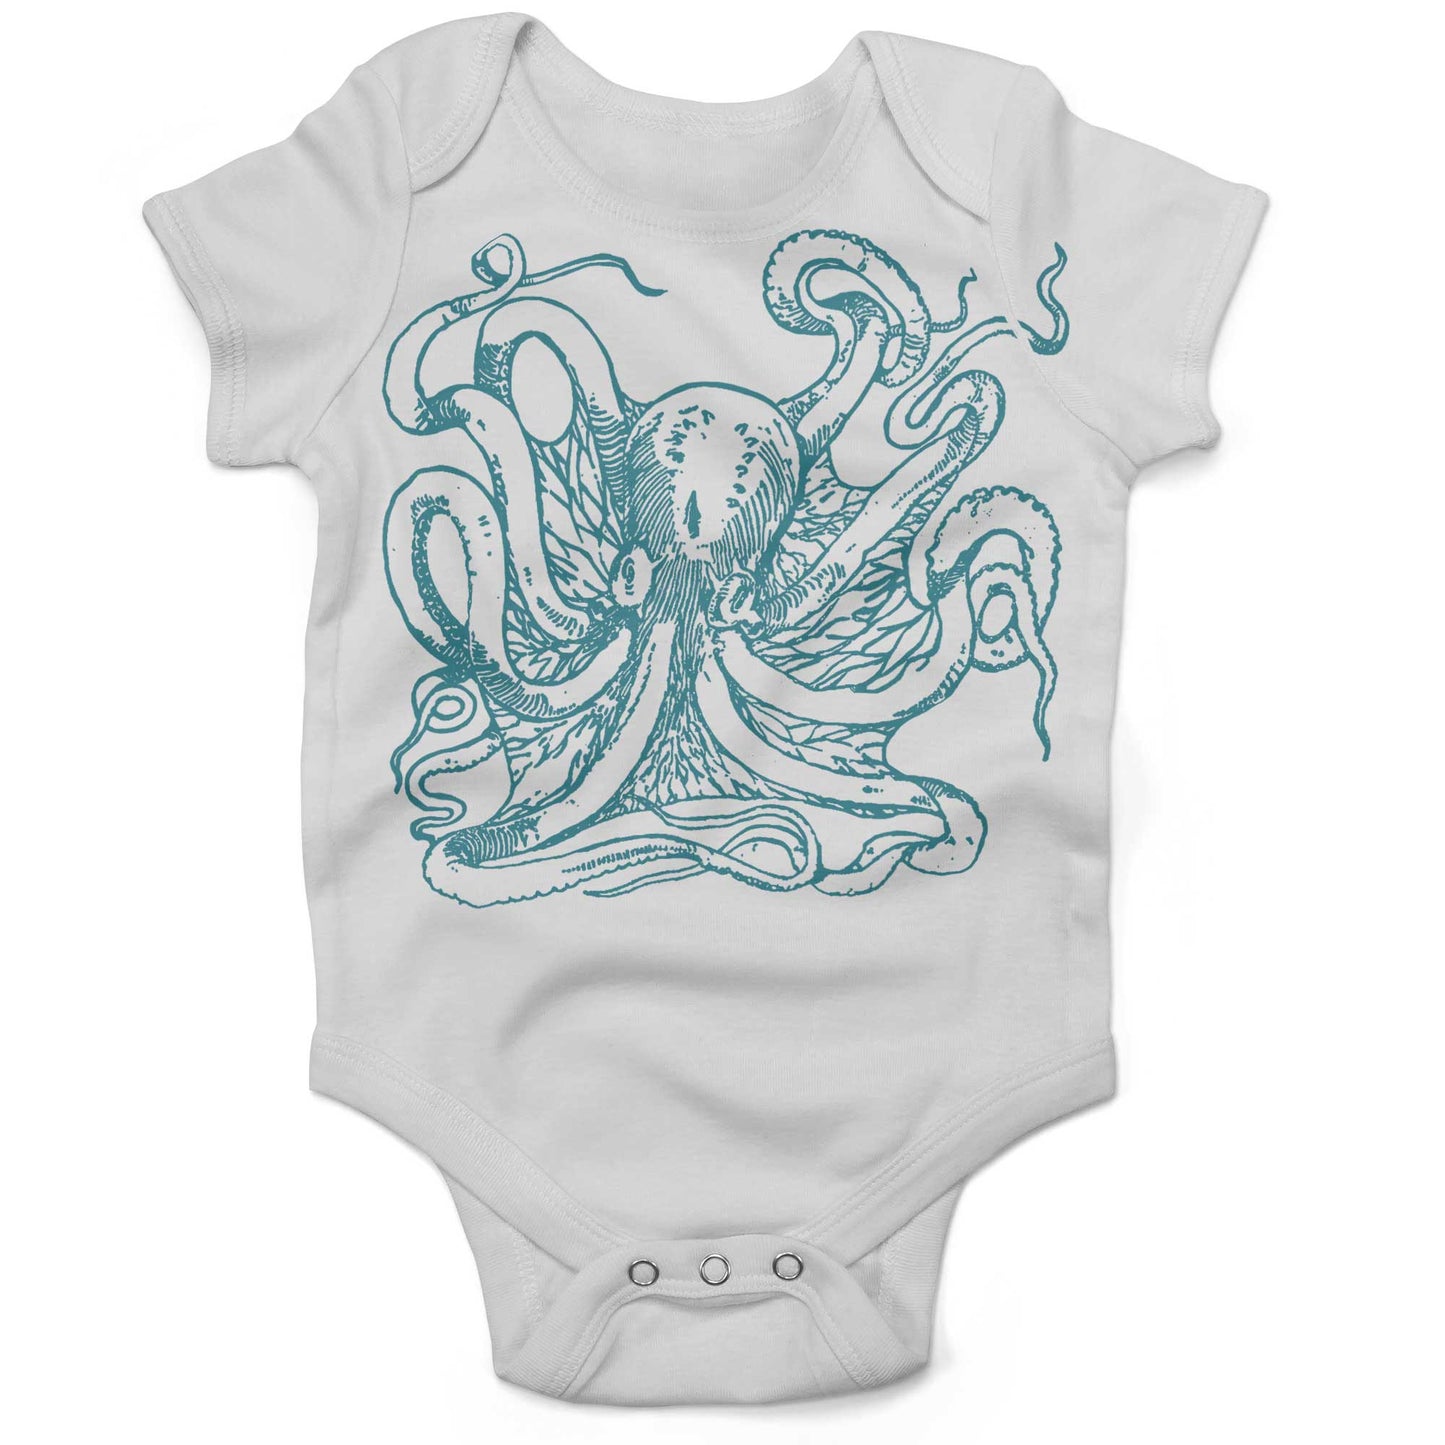 Giant Octopus Infant Bodysuit or Raglan Tee-White-3-6 months